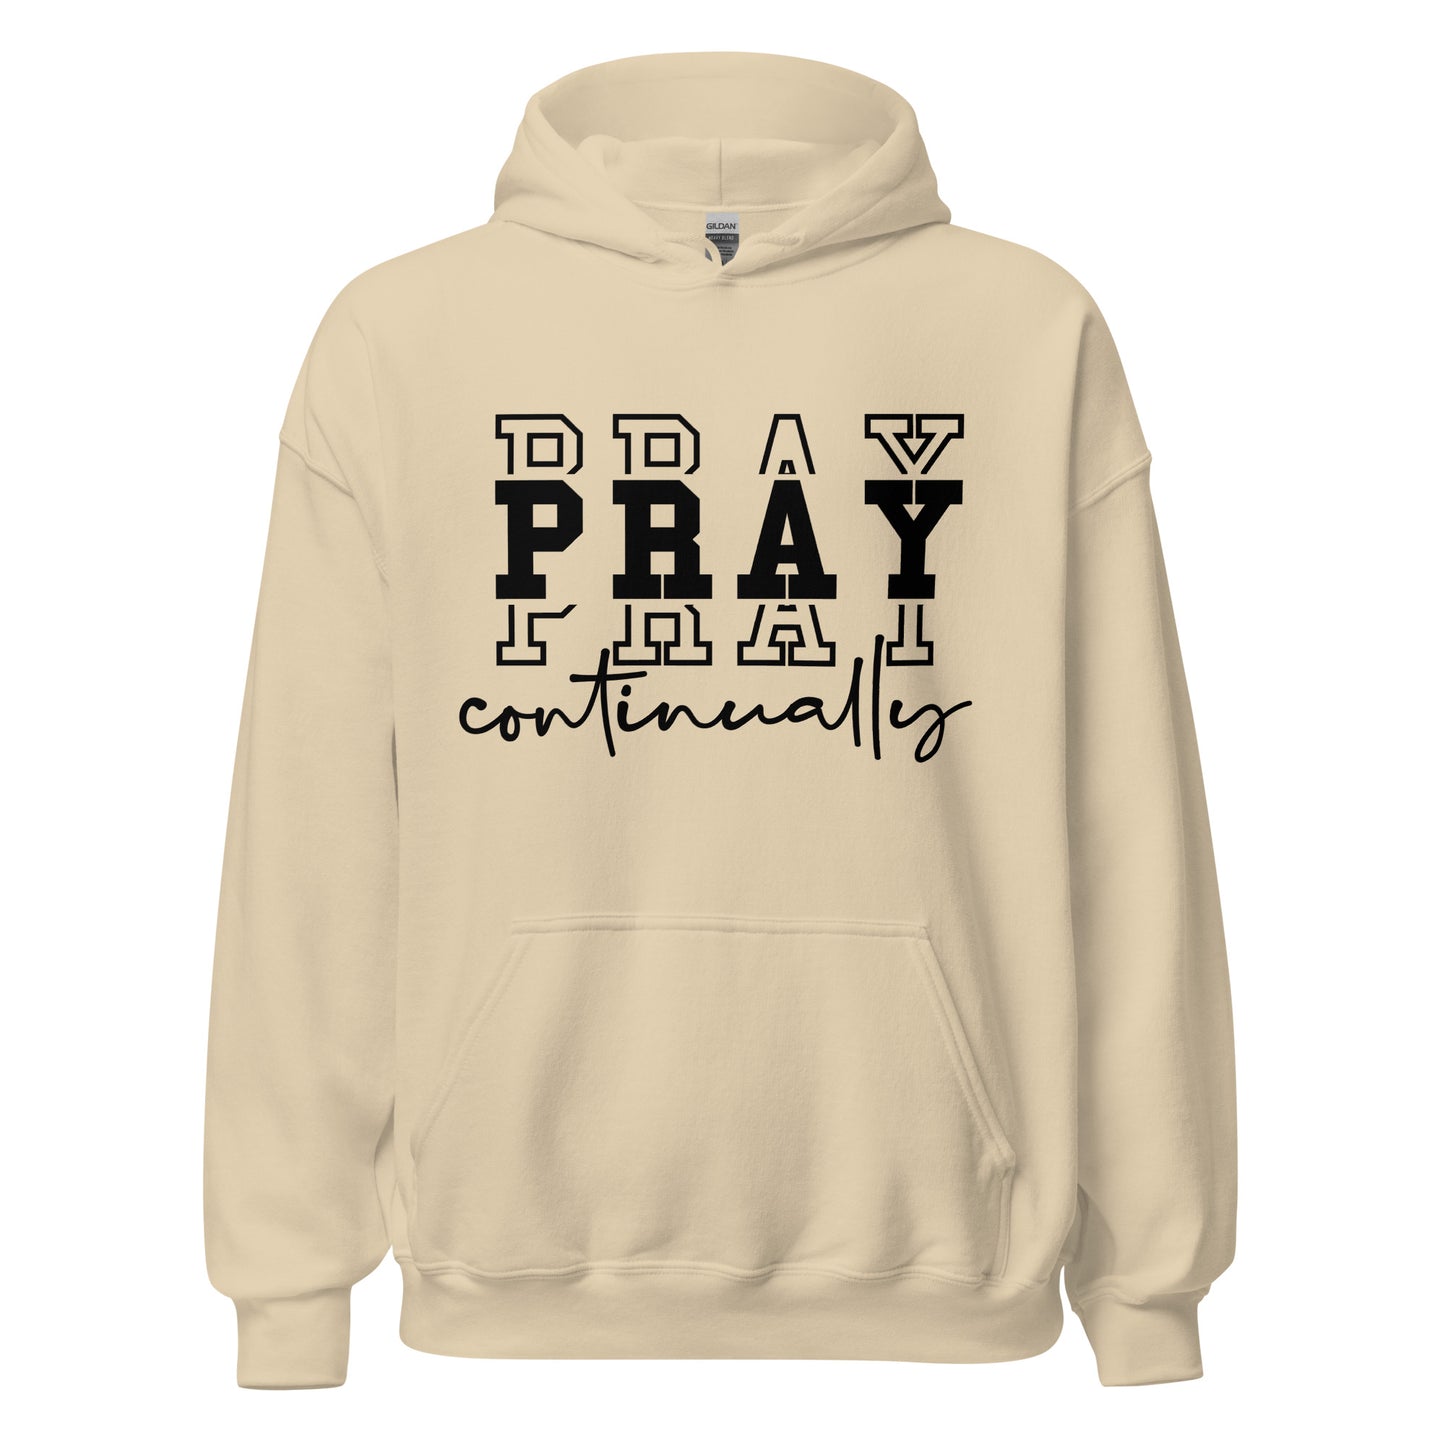 "Pray Continually" Unisex Hoodie.